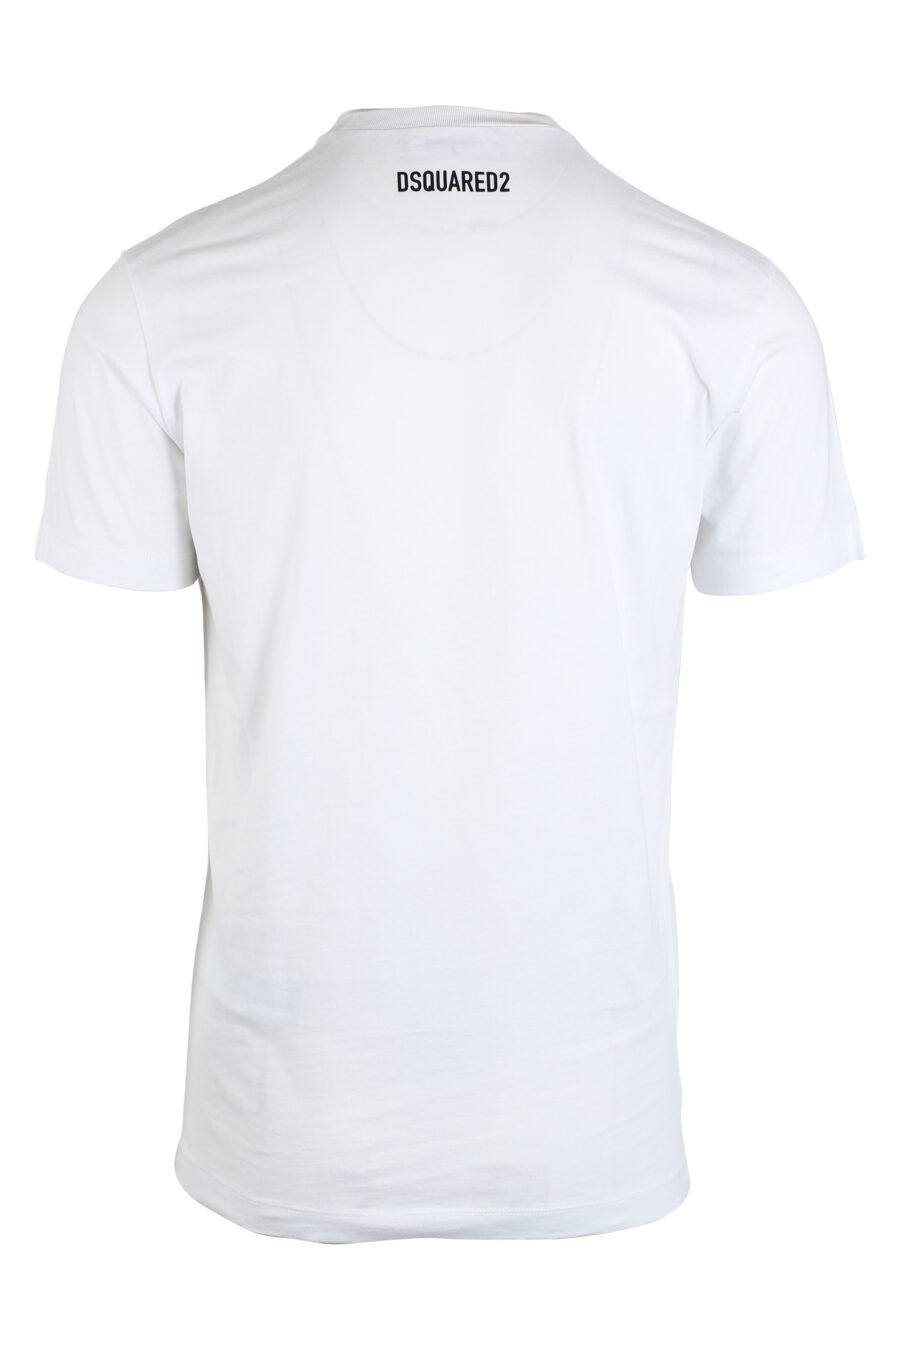 Camiseta blanca con maxilogo "d2" en cuadro rojo - IMG 0675